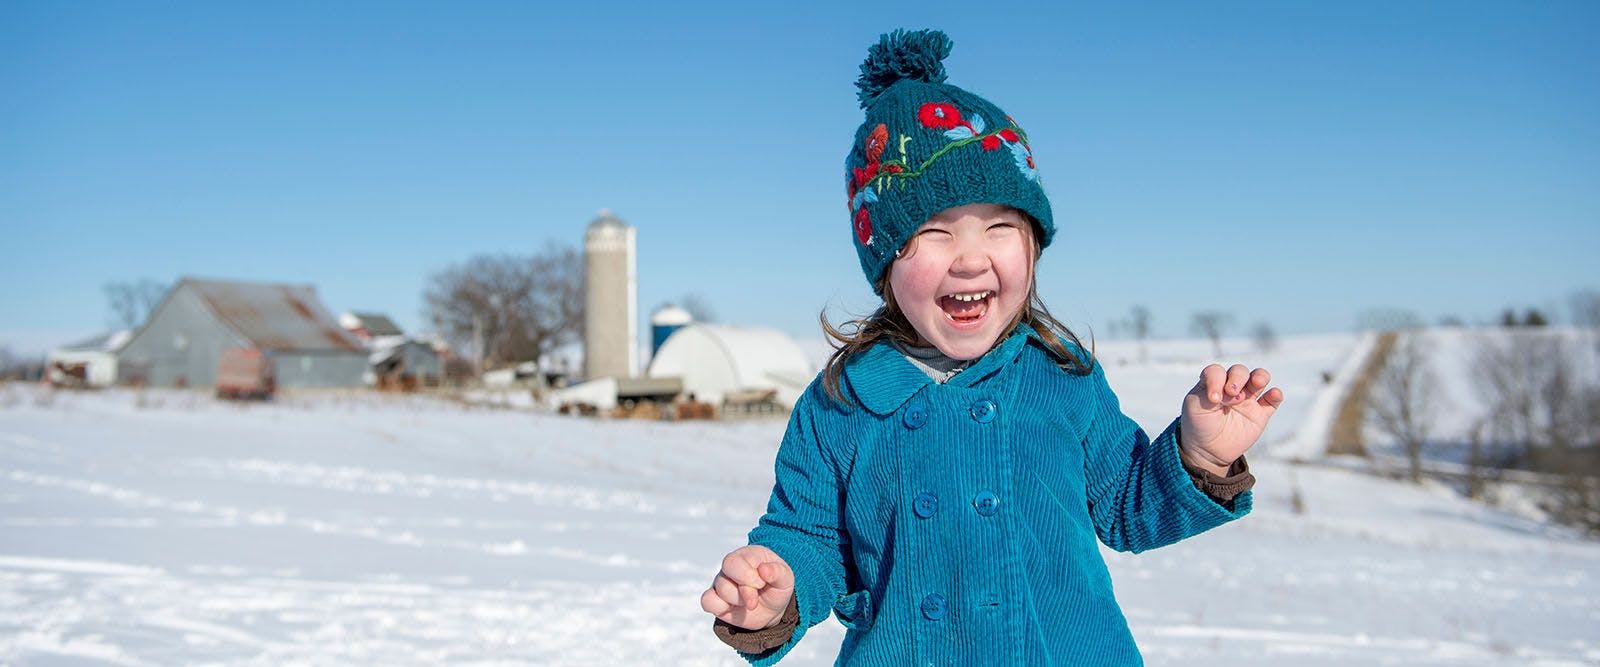 Little girl on farm laughing